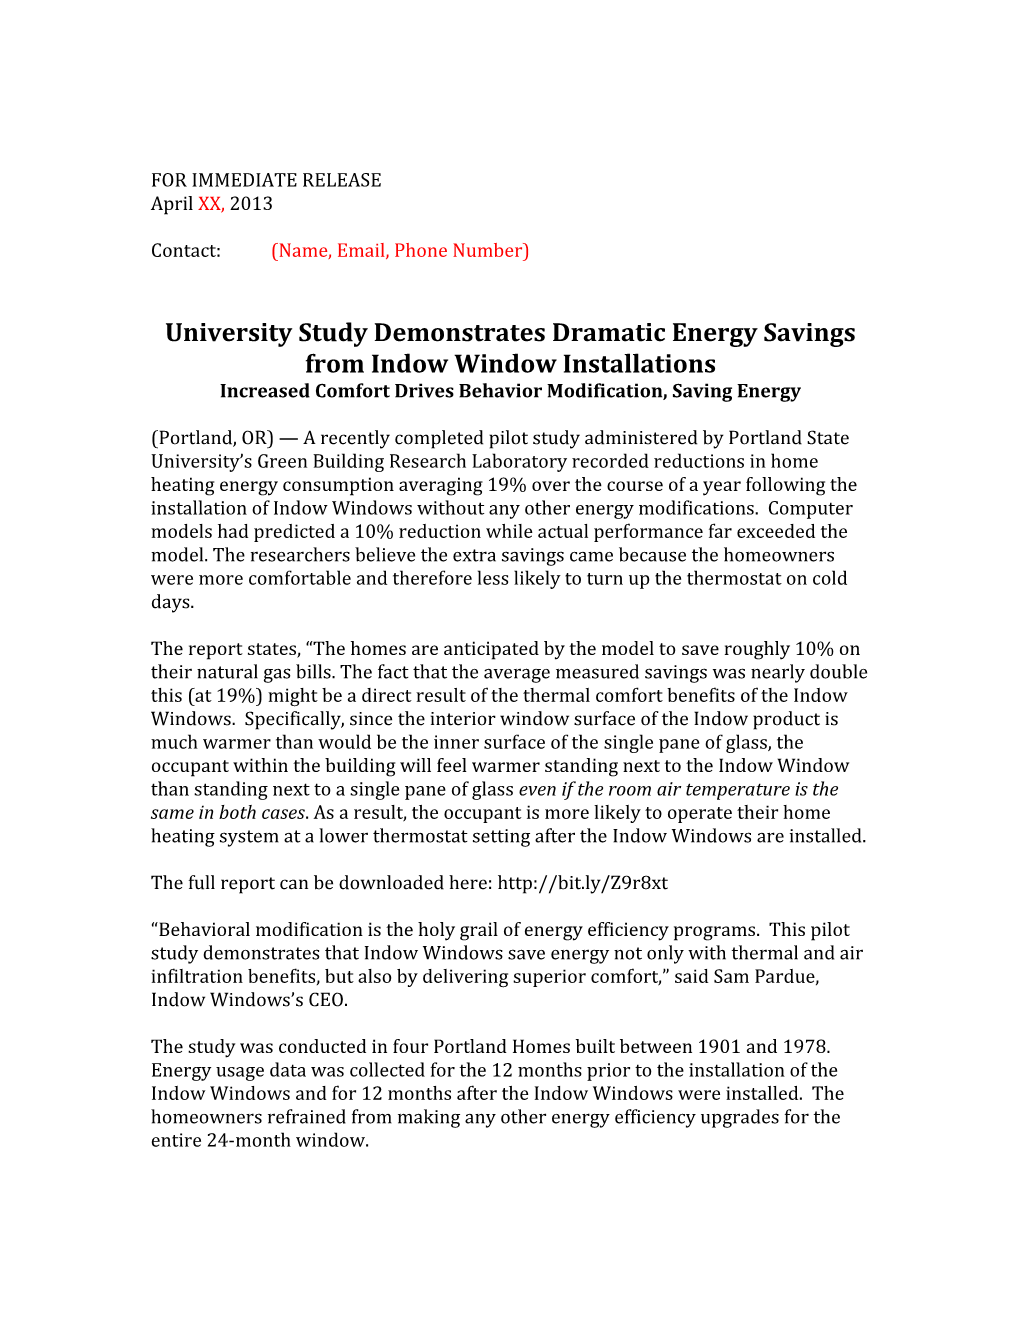 University Study Demonstrates Dramatic Energy Savings from Indow Window Installations